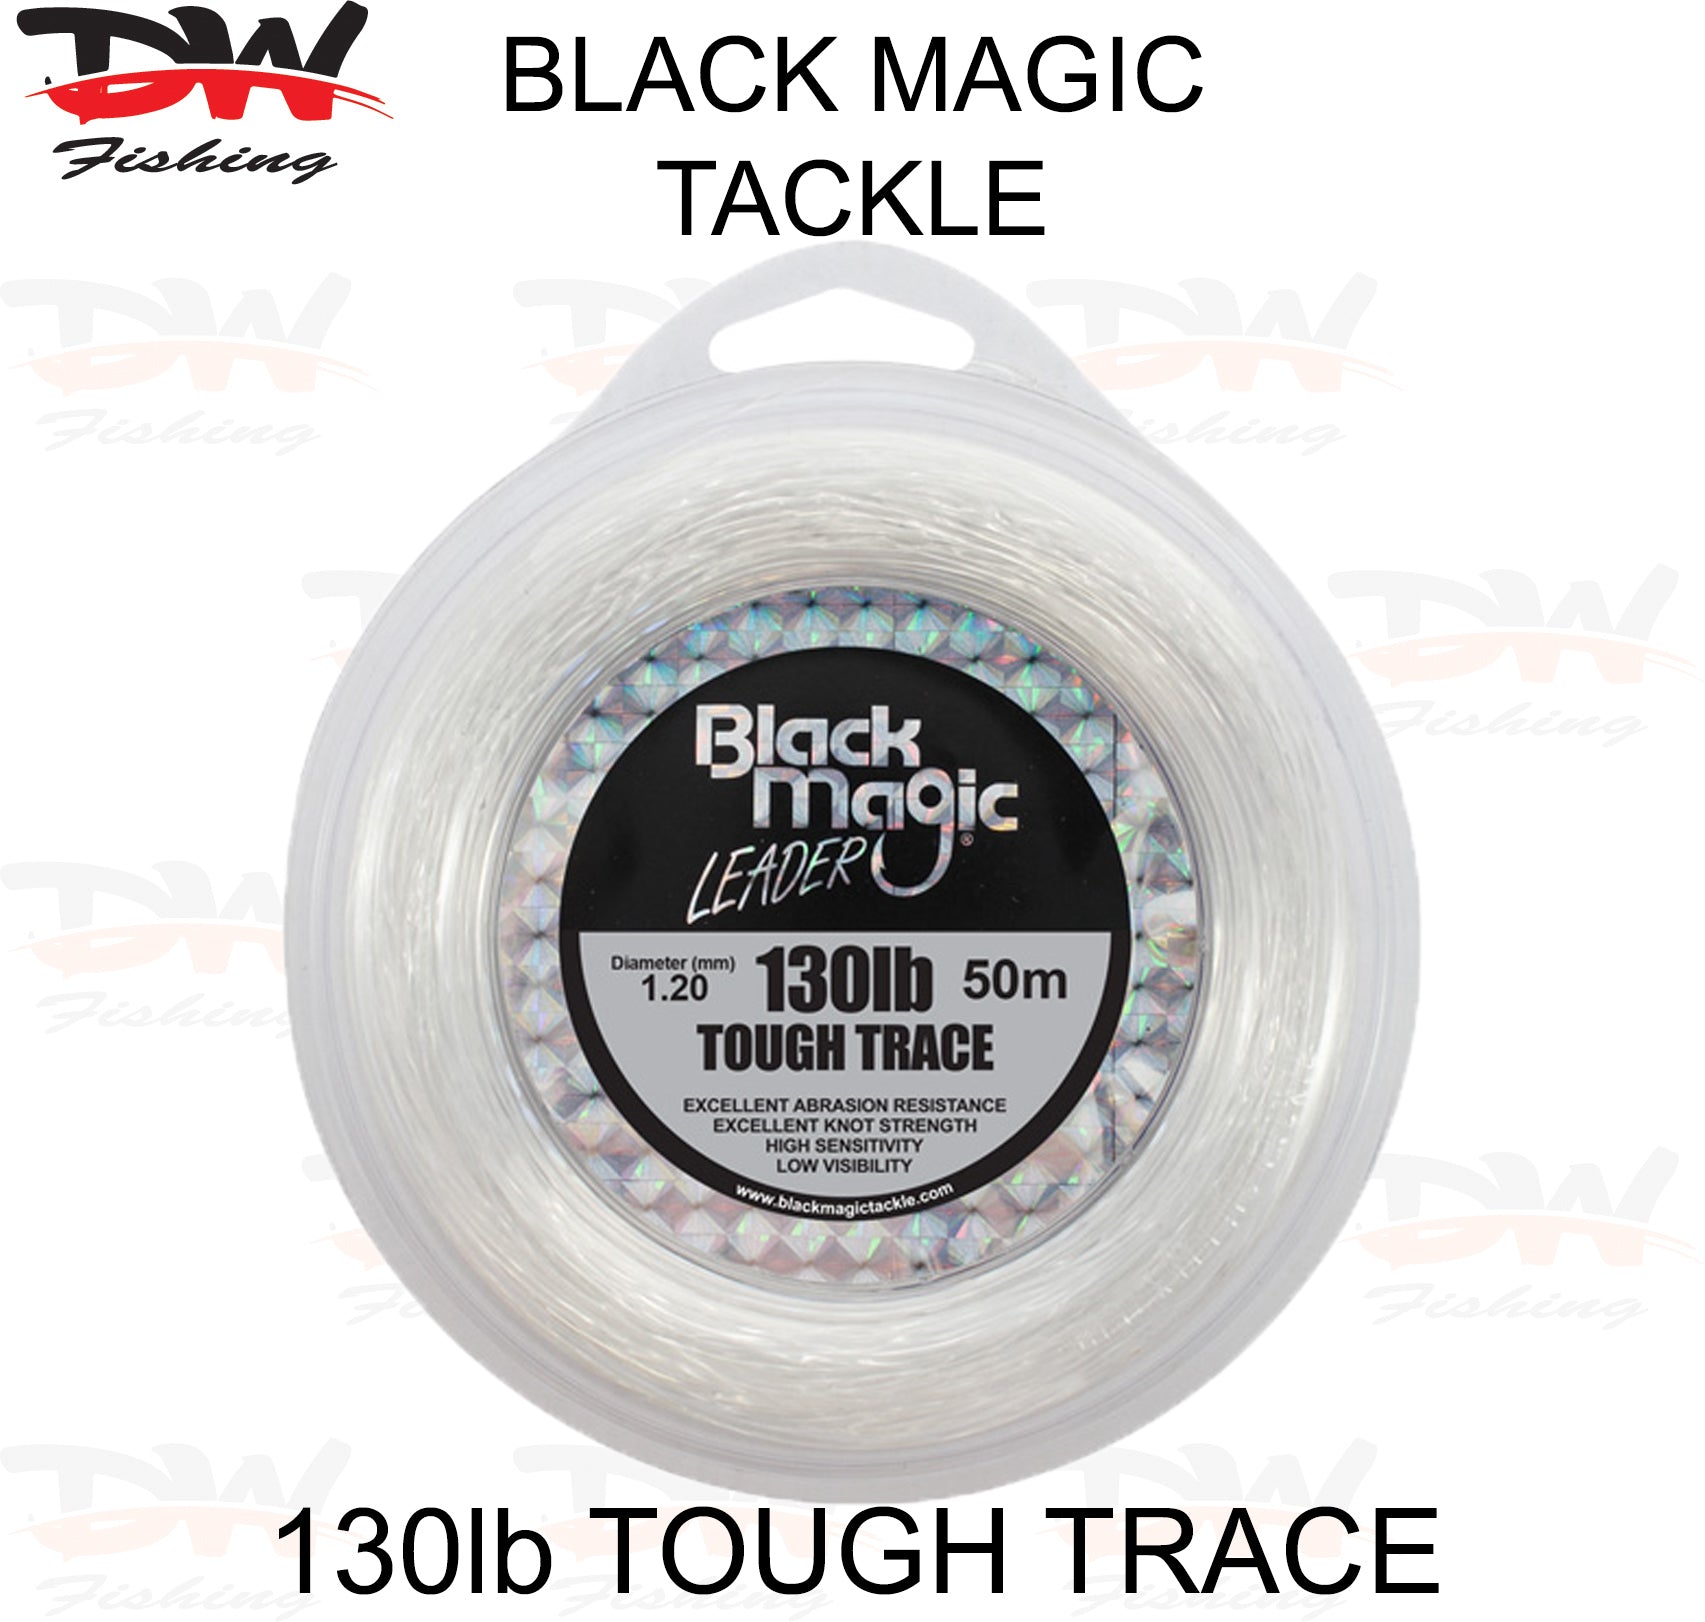 Black Magic Tackle Tough Trace 130lb